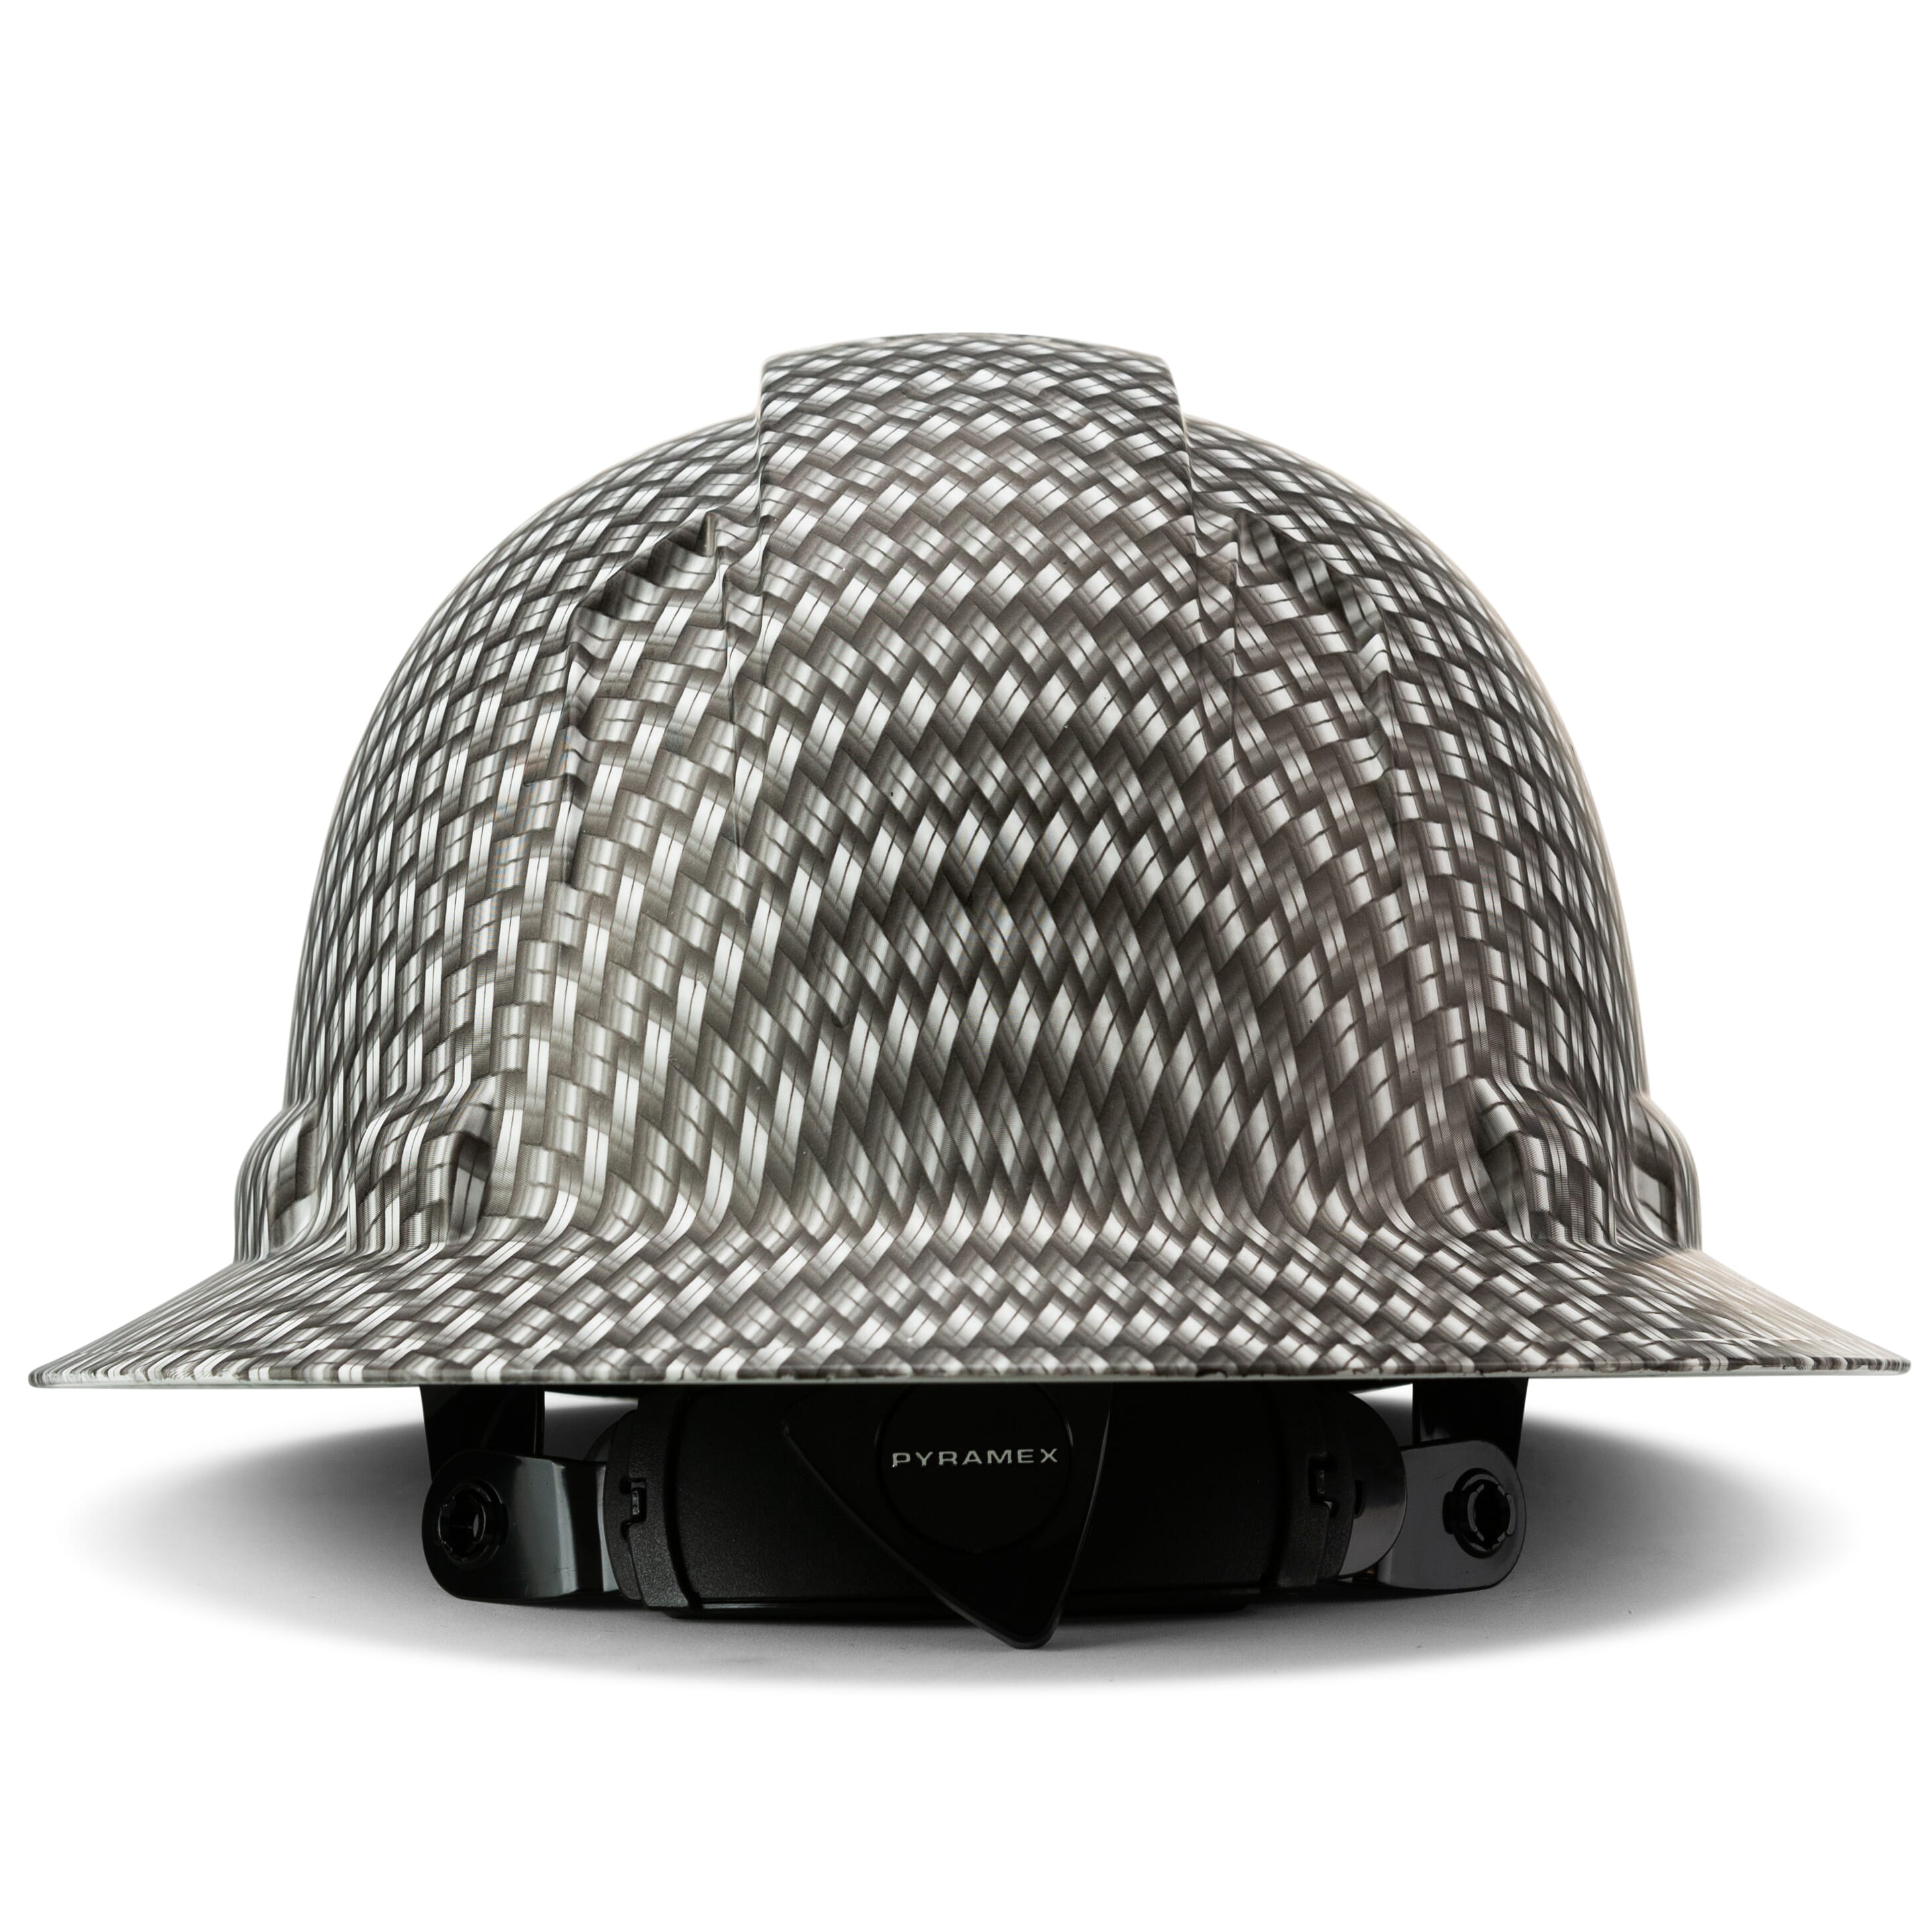 Full Brim Pyramex Hard Hat, Custom Woven Steel Design, Safety Helmet, 6 Point